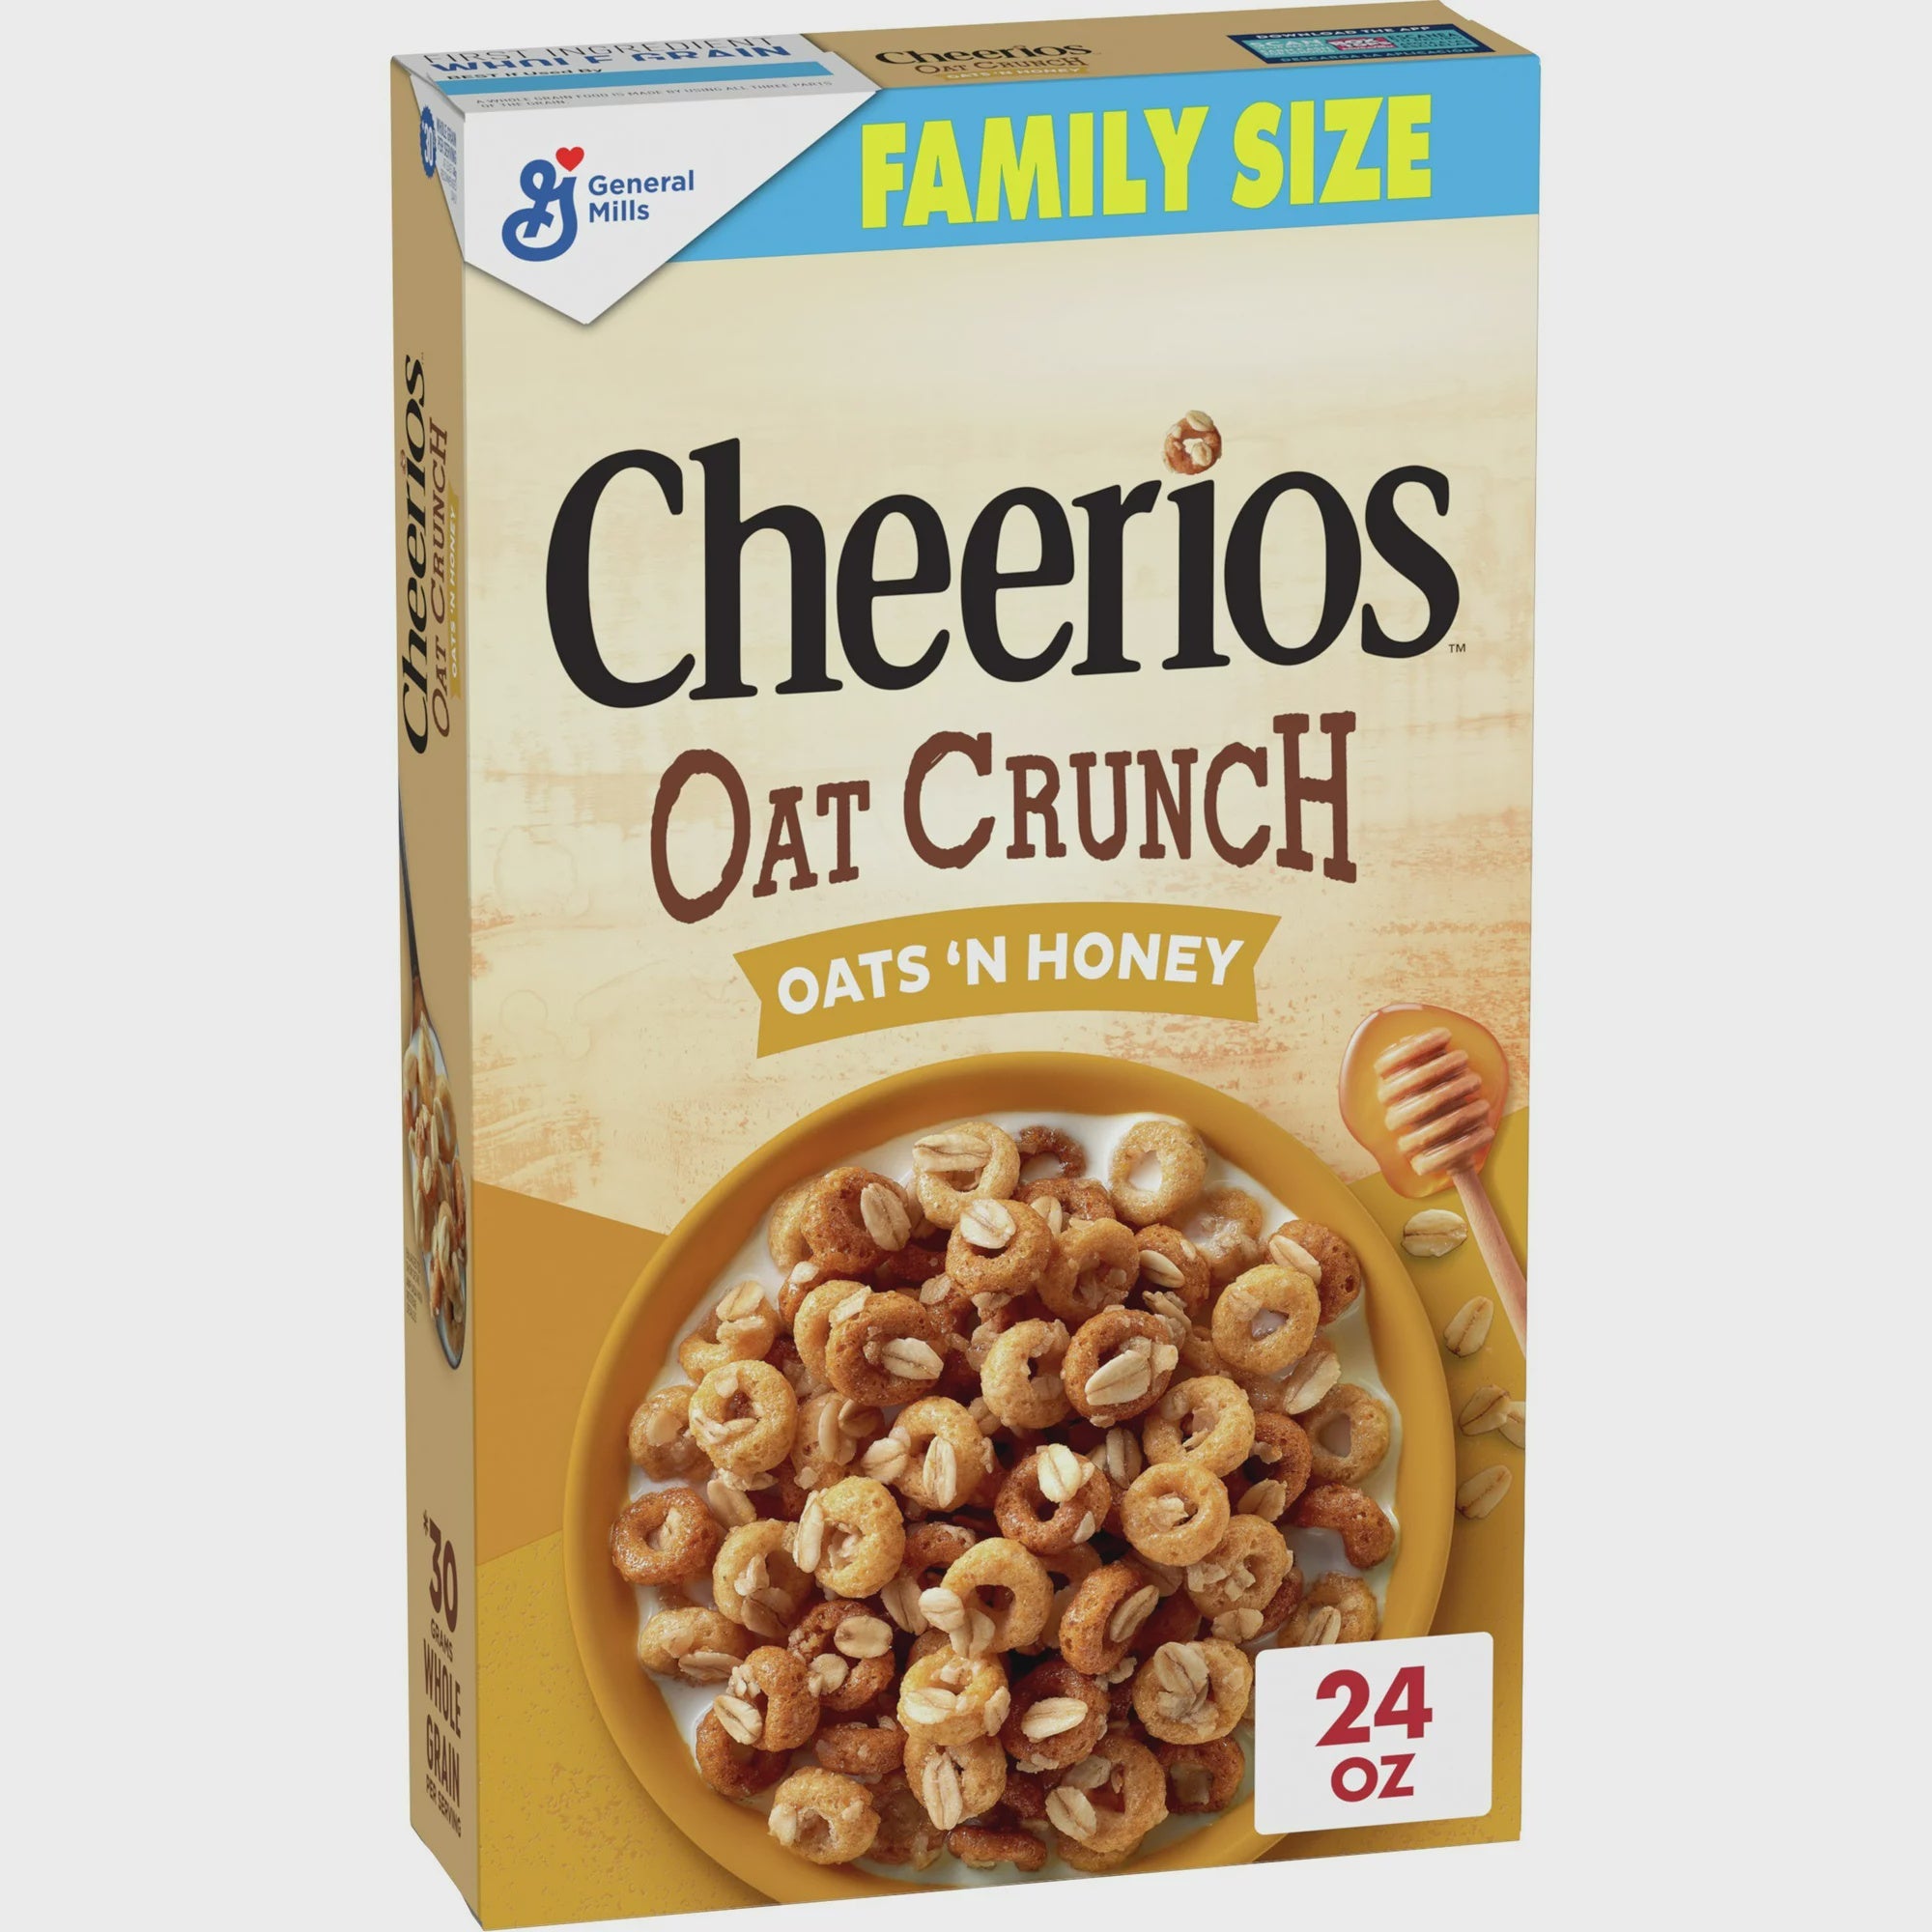 GENERAL MILLS Cheerios Oat Crunch Oats'n Honey 24 oz